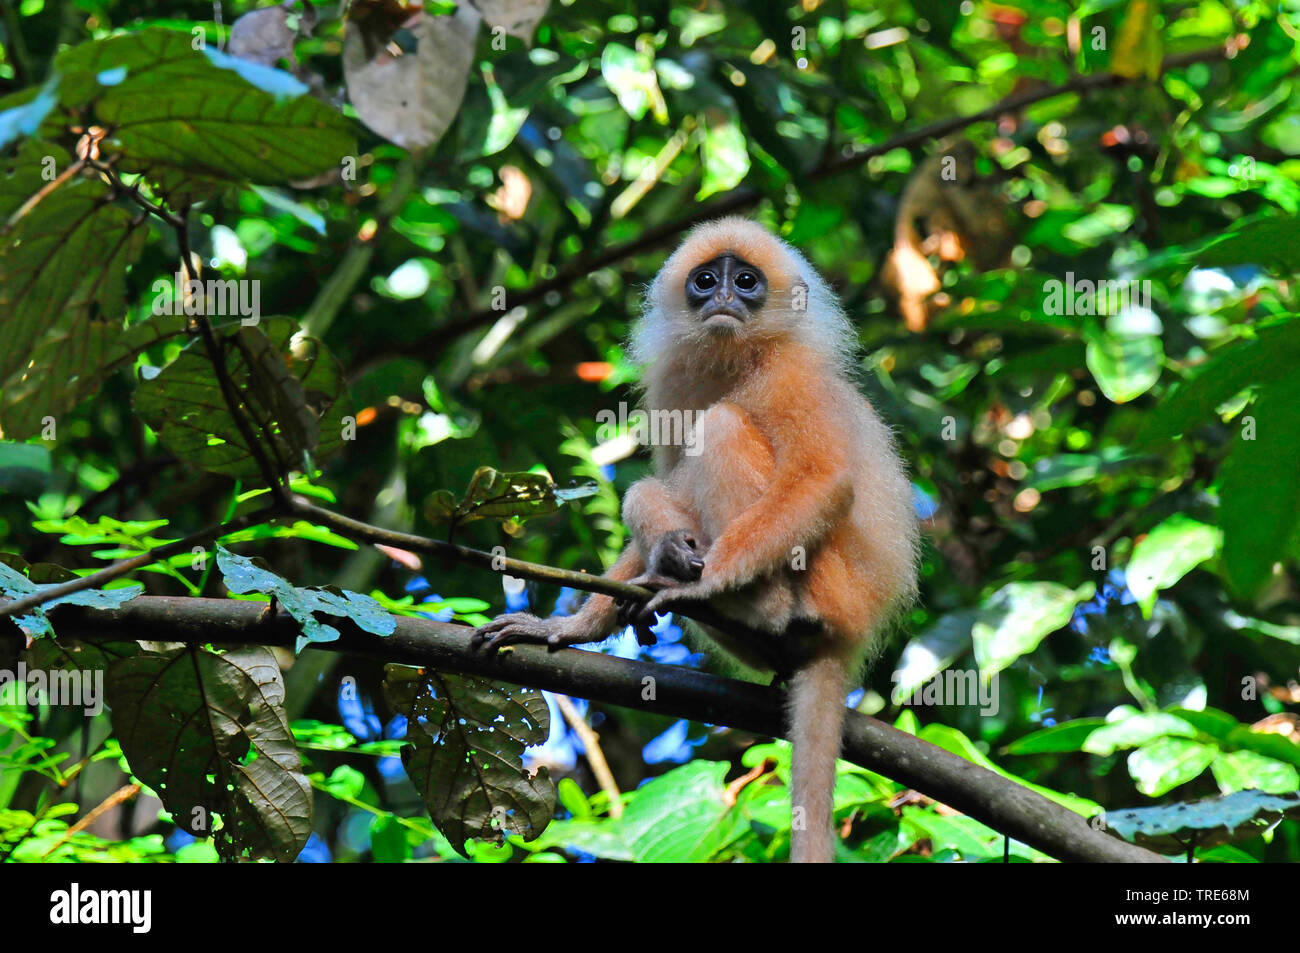 Maroon leaf monkey, Red leaf monkey (Presbytis rubicunda), sits on a branch, Indonesia, Borneo Stock Photo